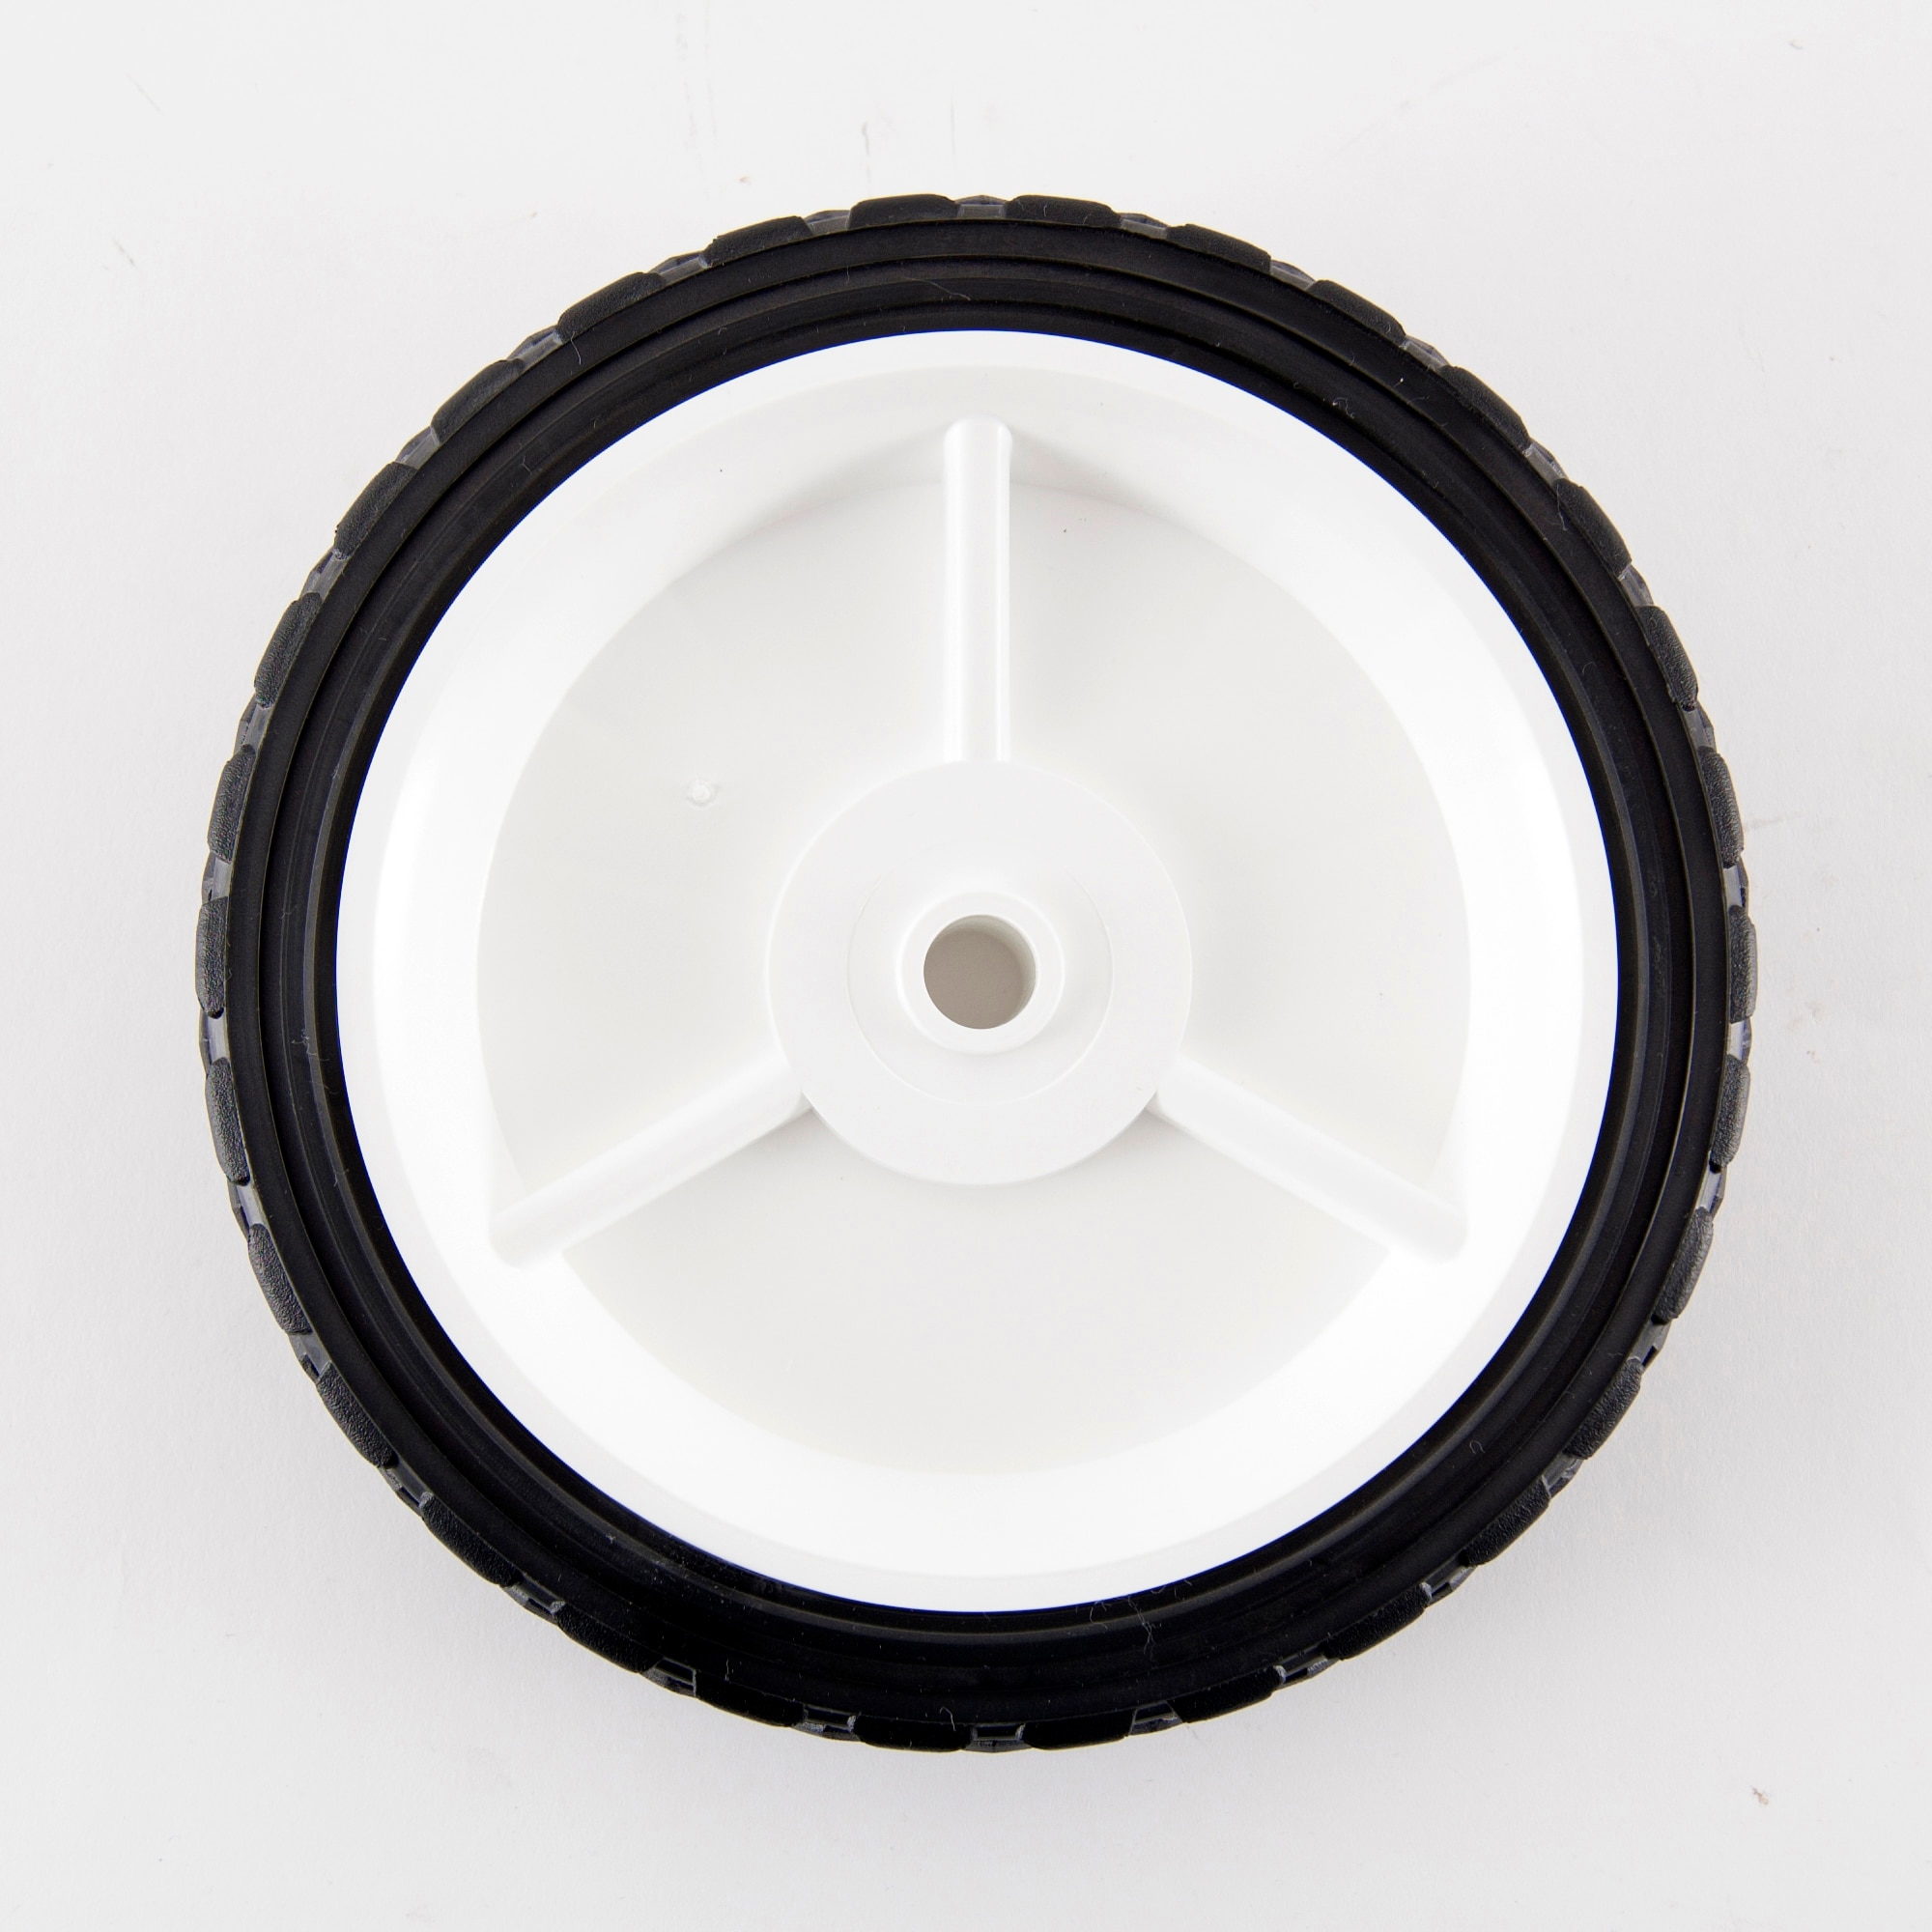 7 X 1.50 Arnold 490-321-0002 Diamond Tread Plastic Wheel for sale online 